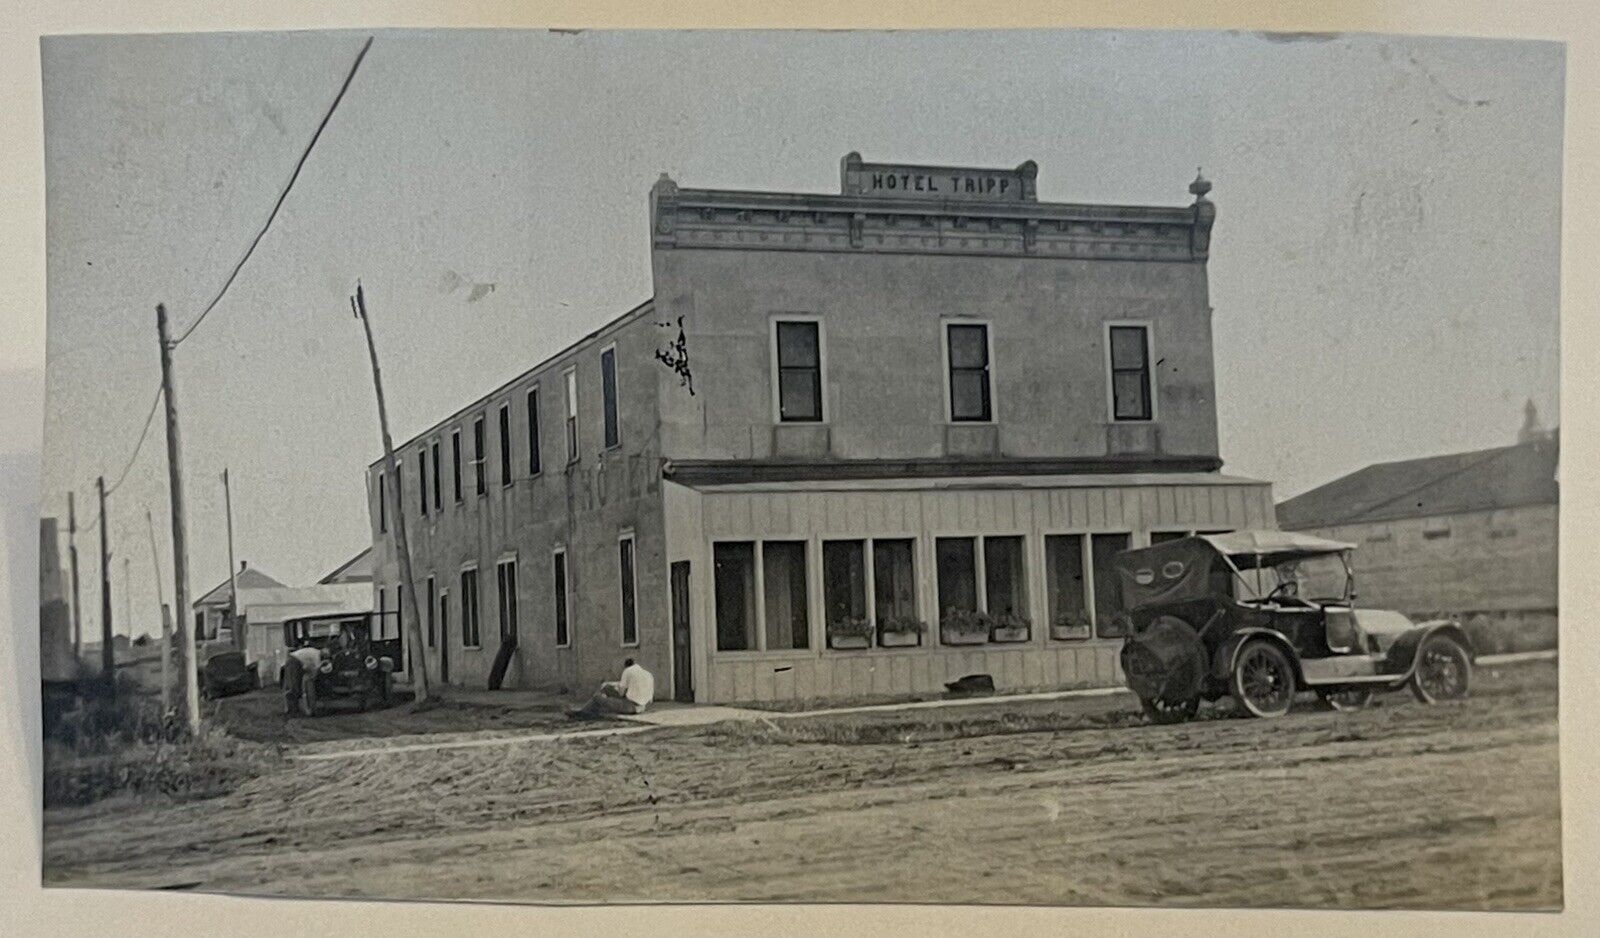 Vintage Photograph Black White Snapshot Hotel Tripp In Colome, South Dakota